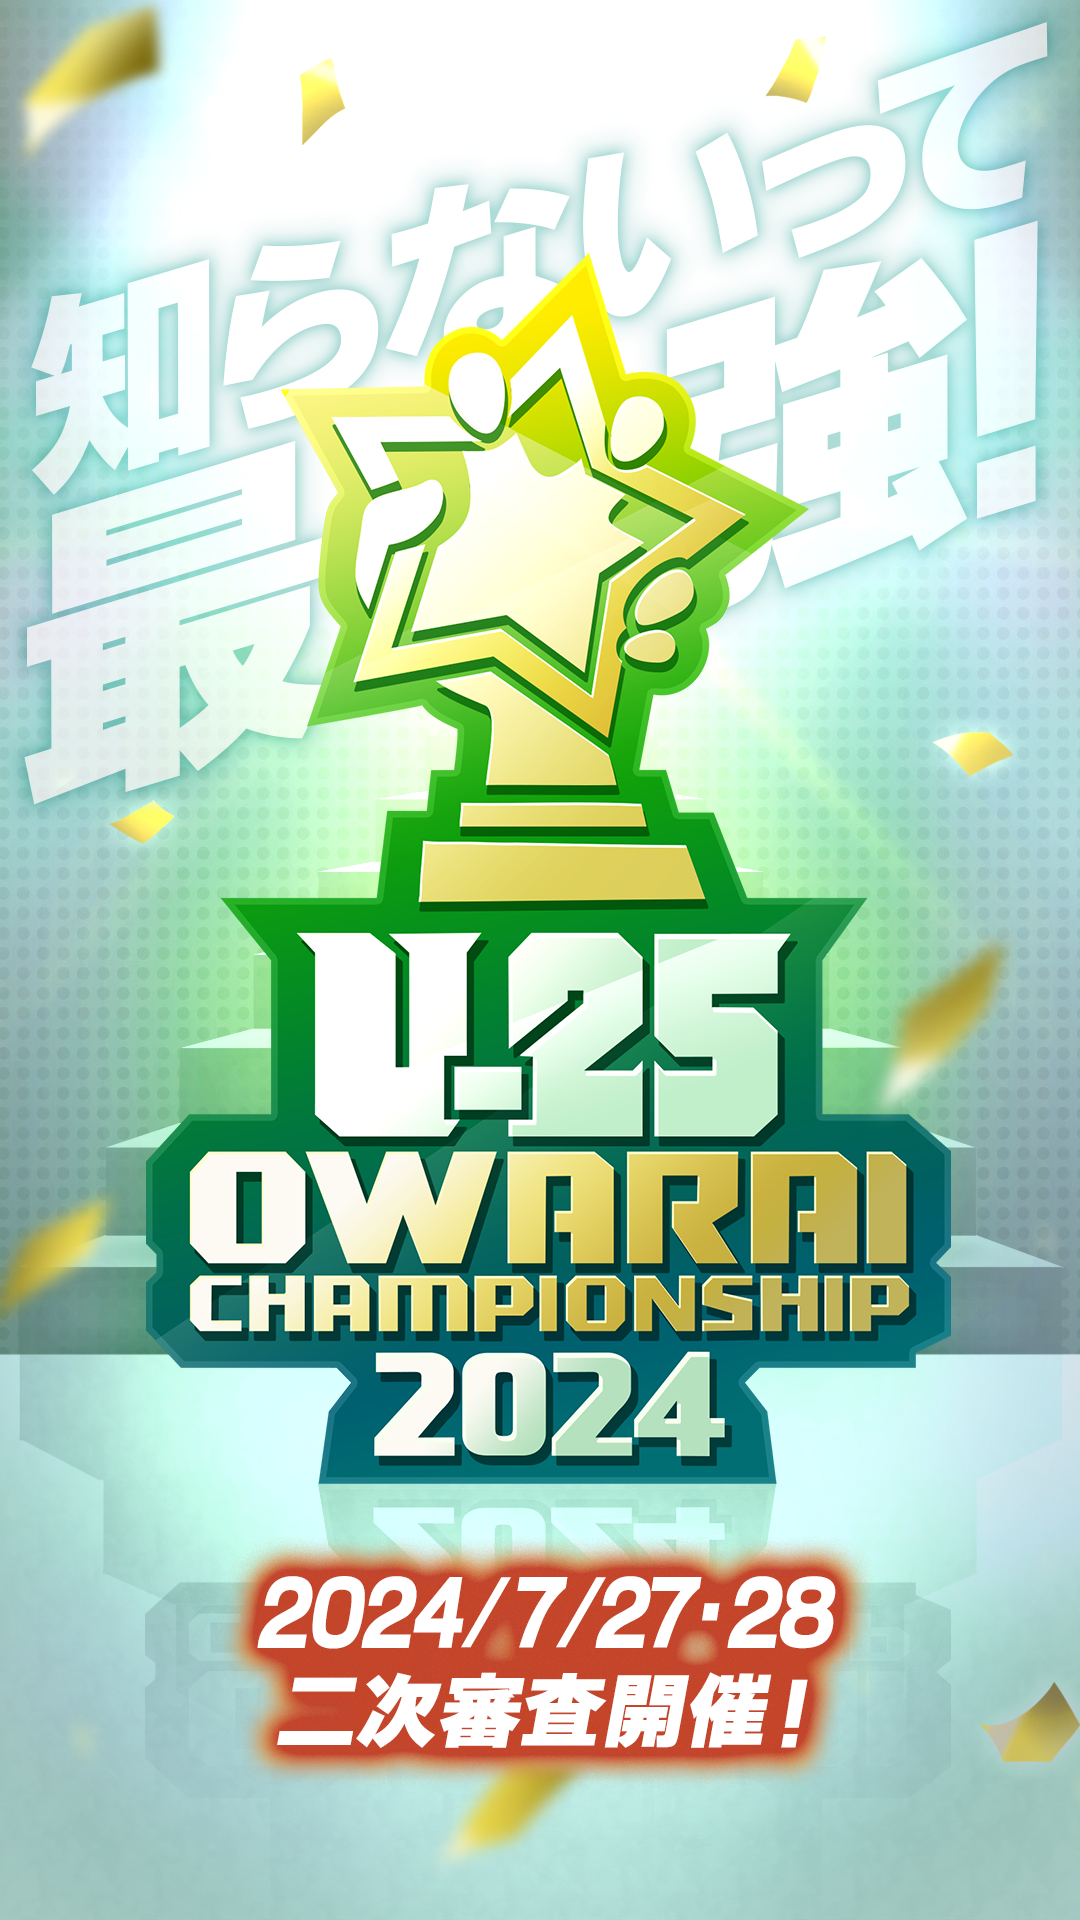 U-25 OWARAI CHAMPIONSHIP